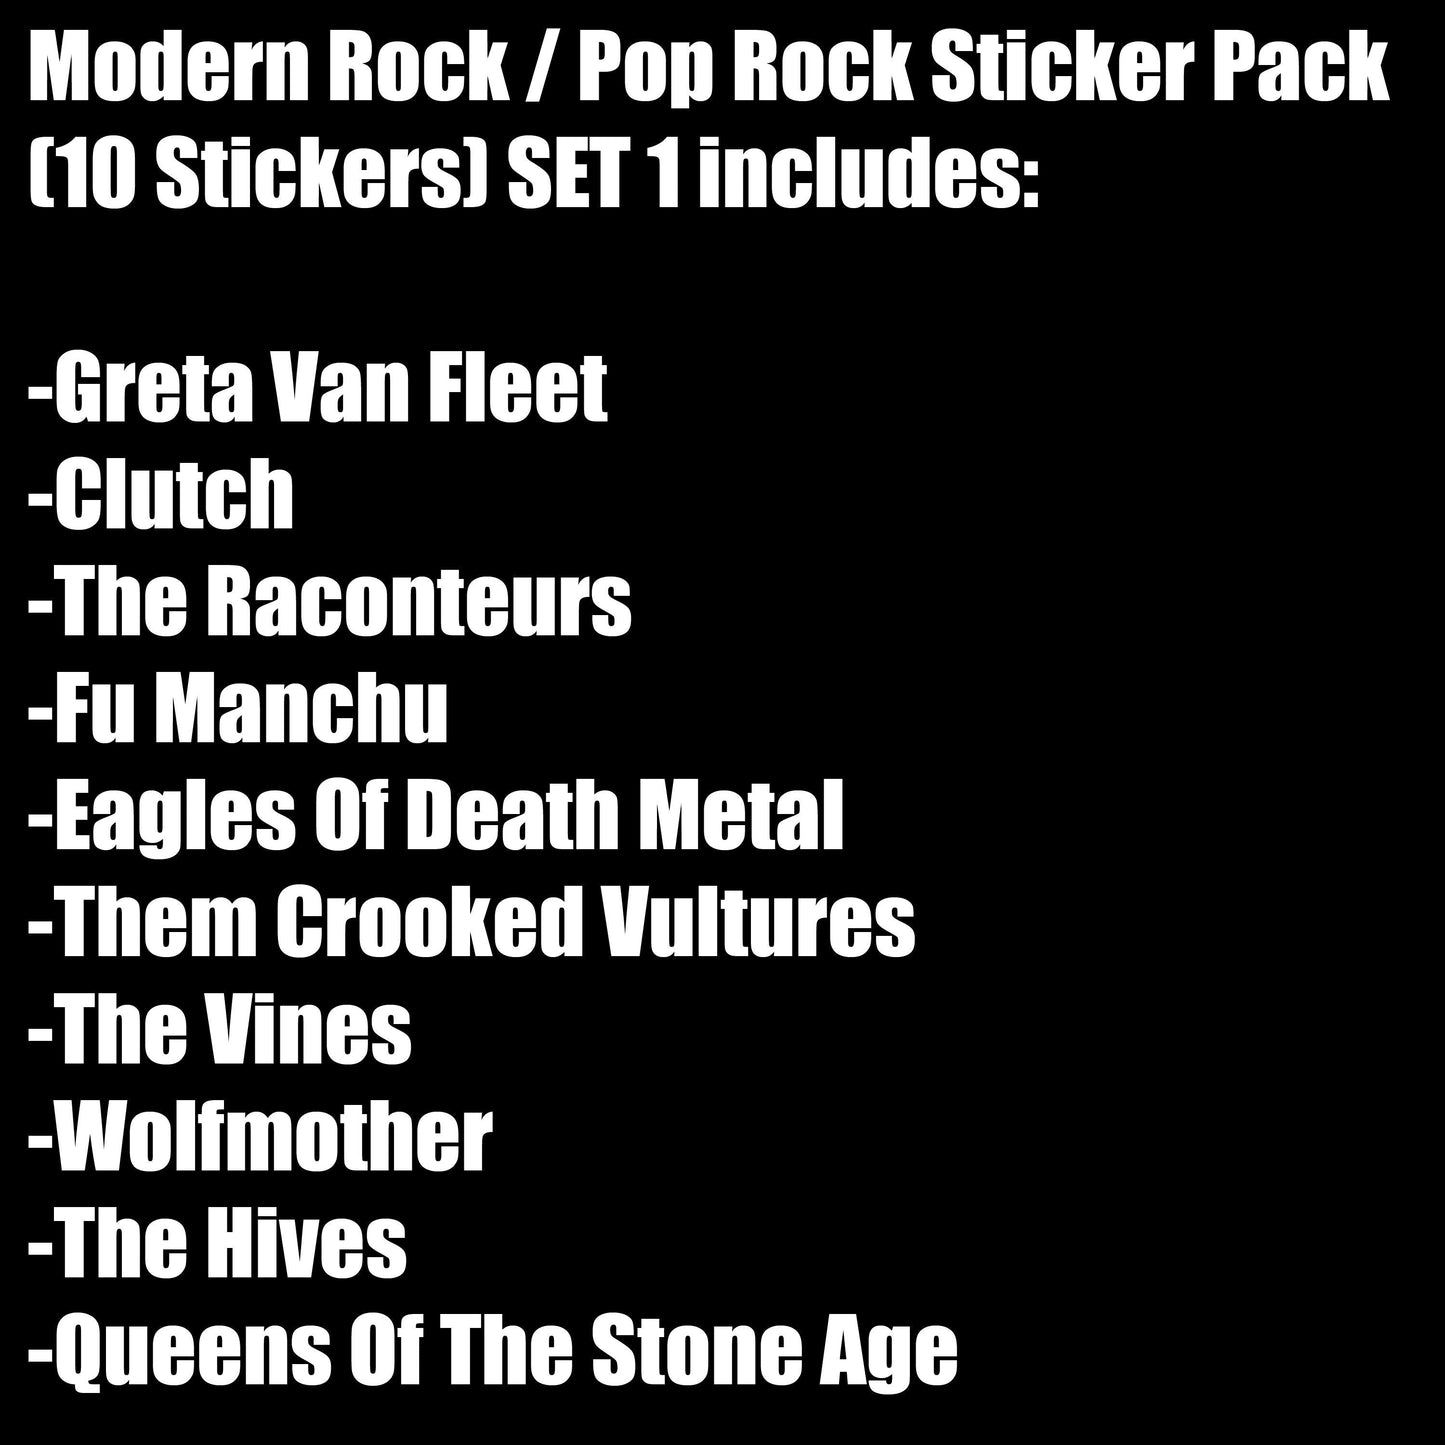 Modern Rock / Pop Rock Sticker Pack (10 Stickers) Set 1